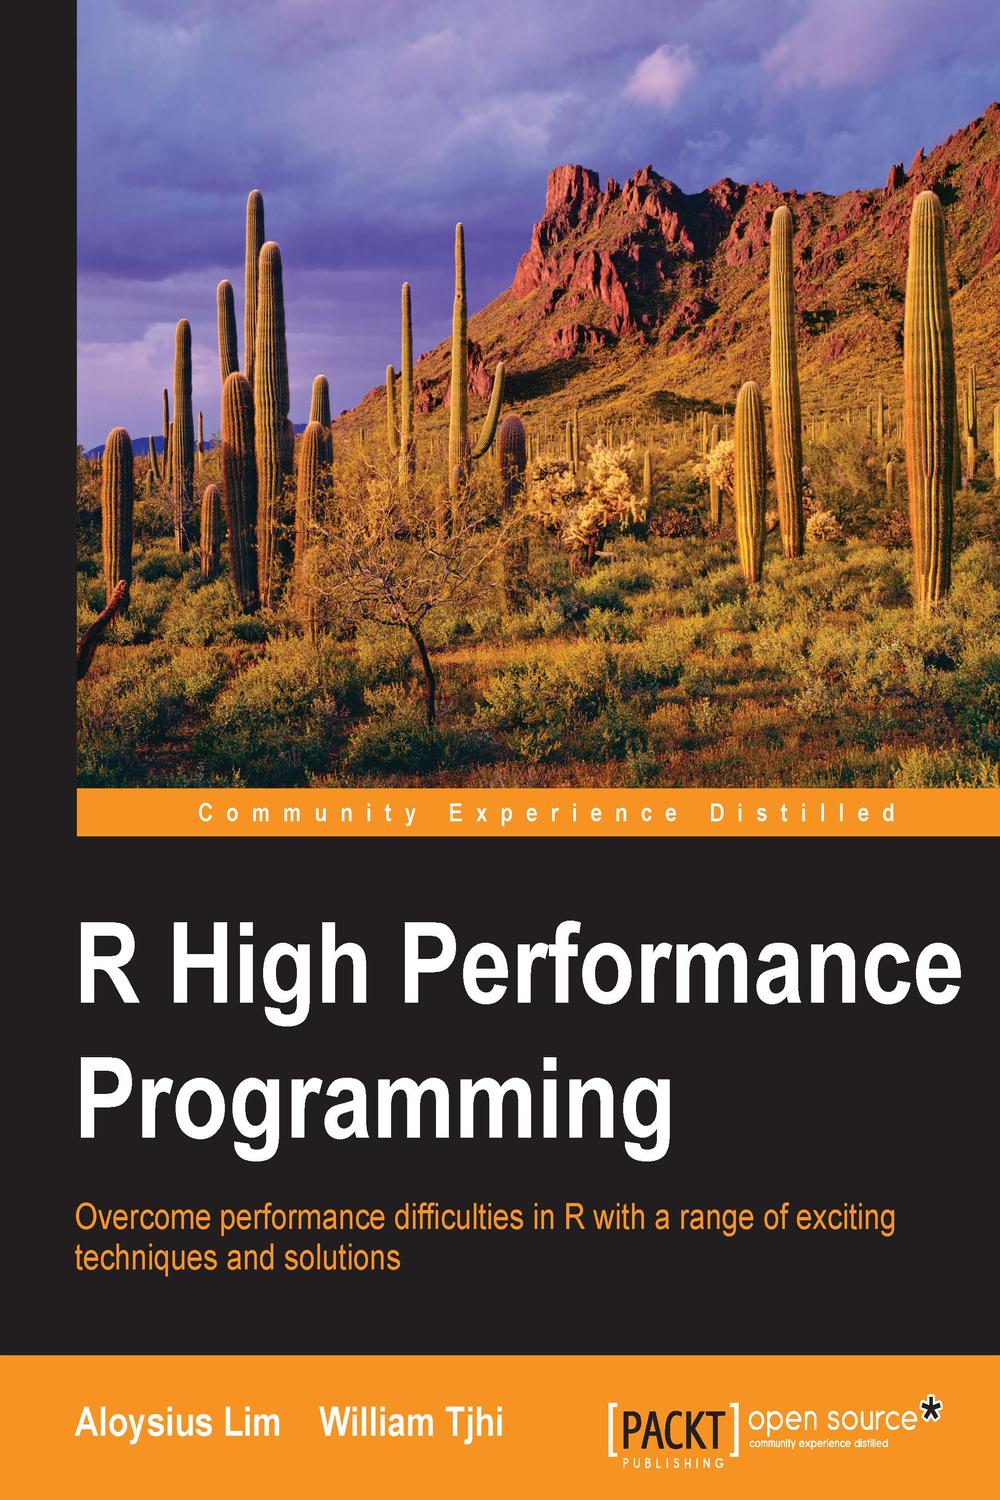 R High Performance Programming - Aloysius Lim, William Tjhi